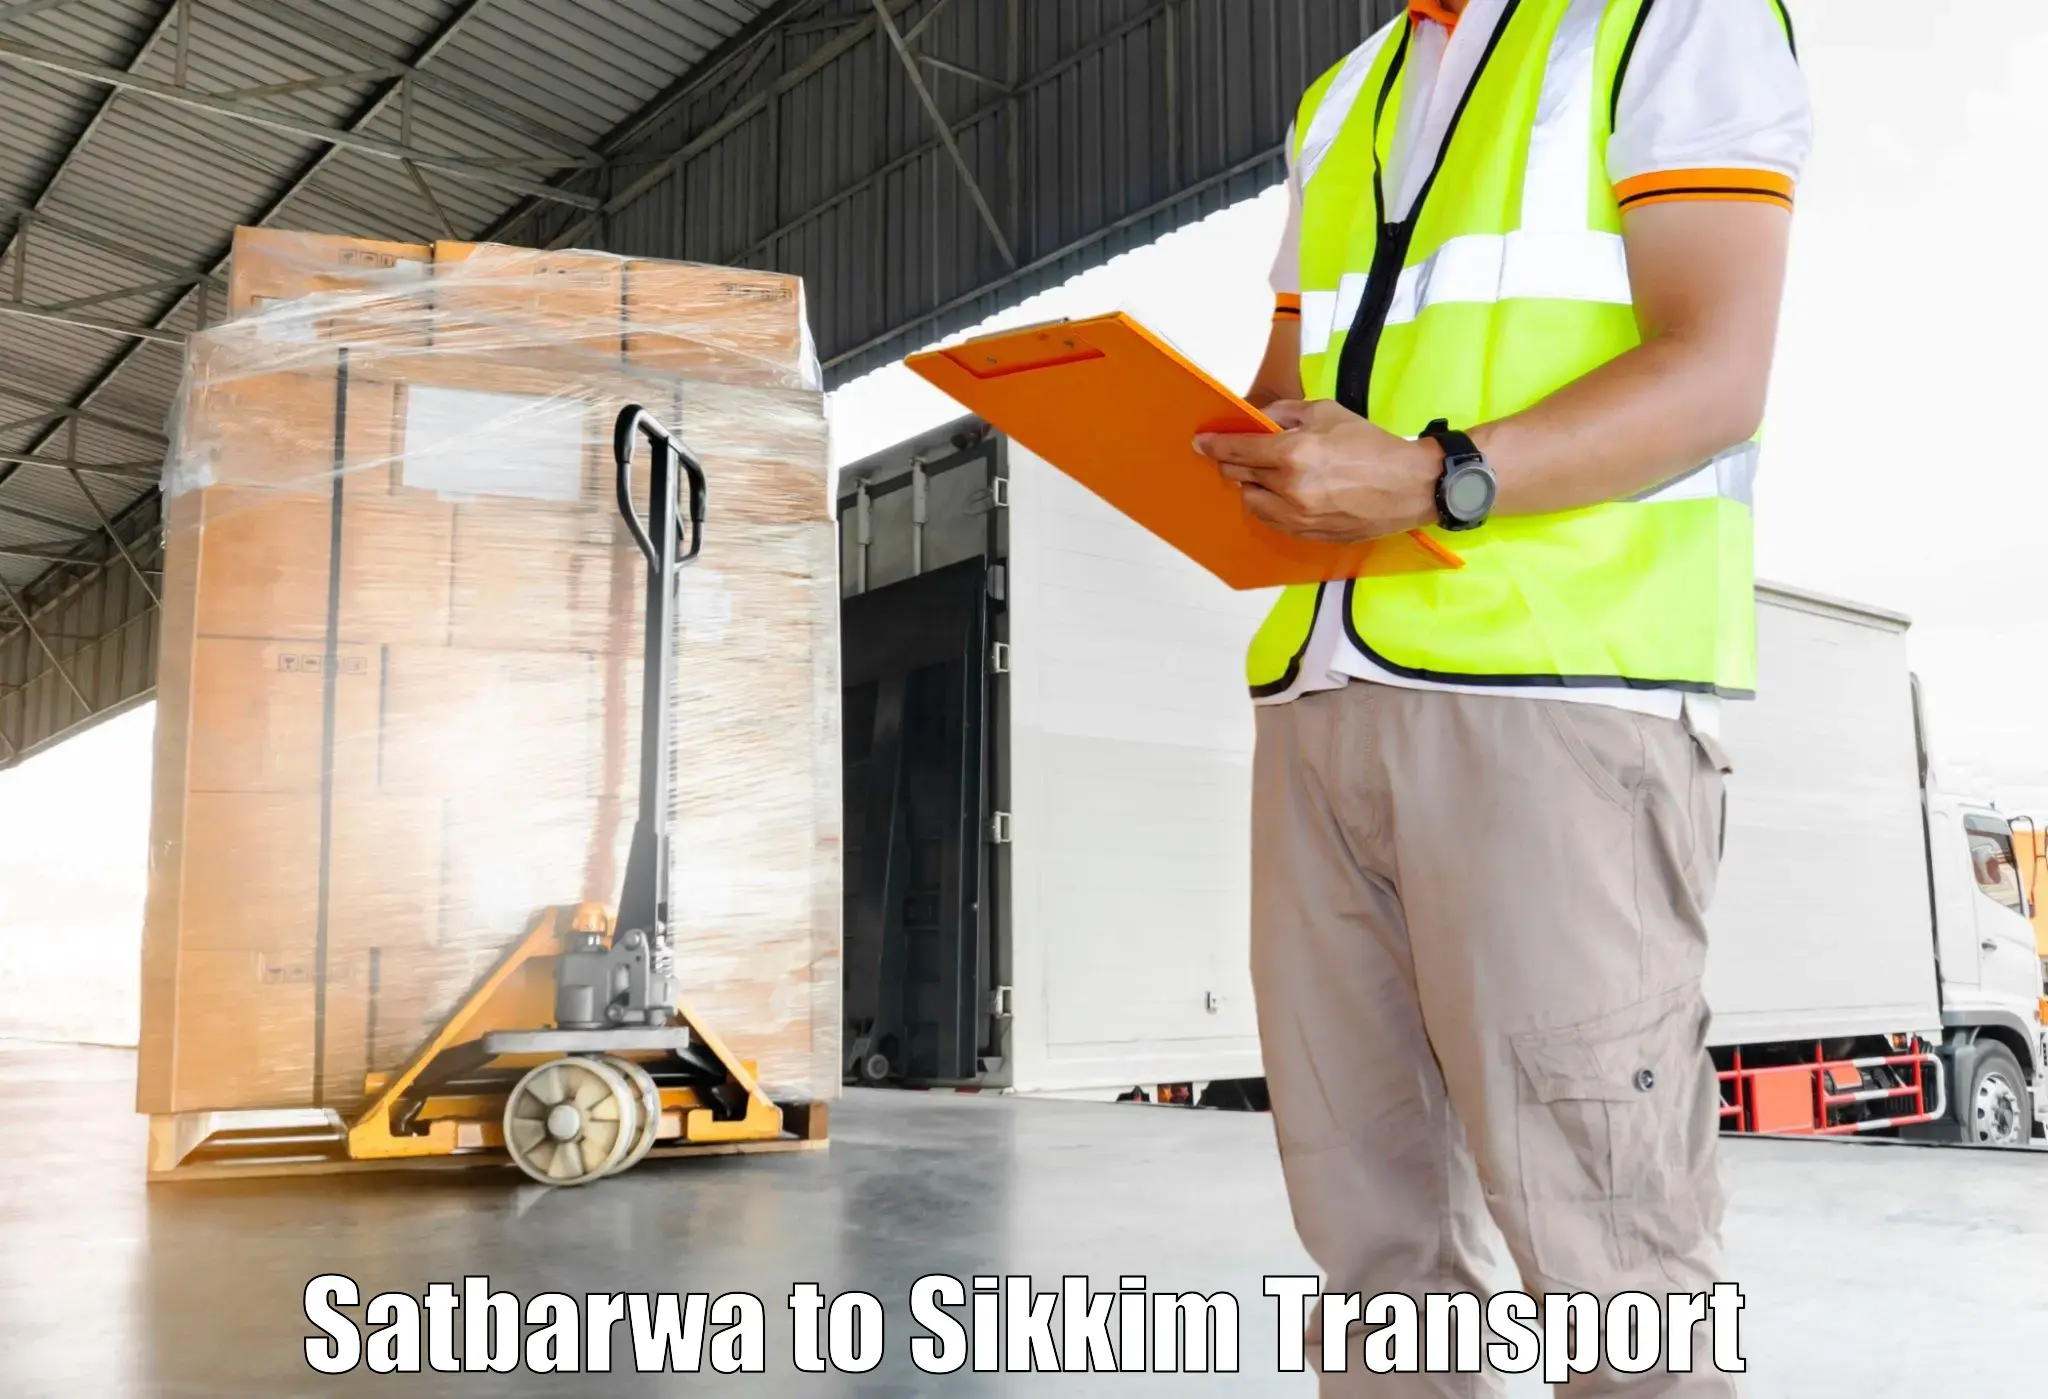 Interstate goods transport in Satbarwa to Pelling